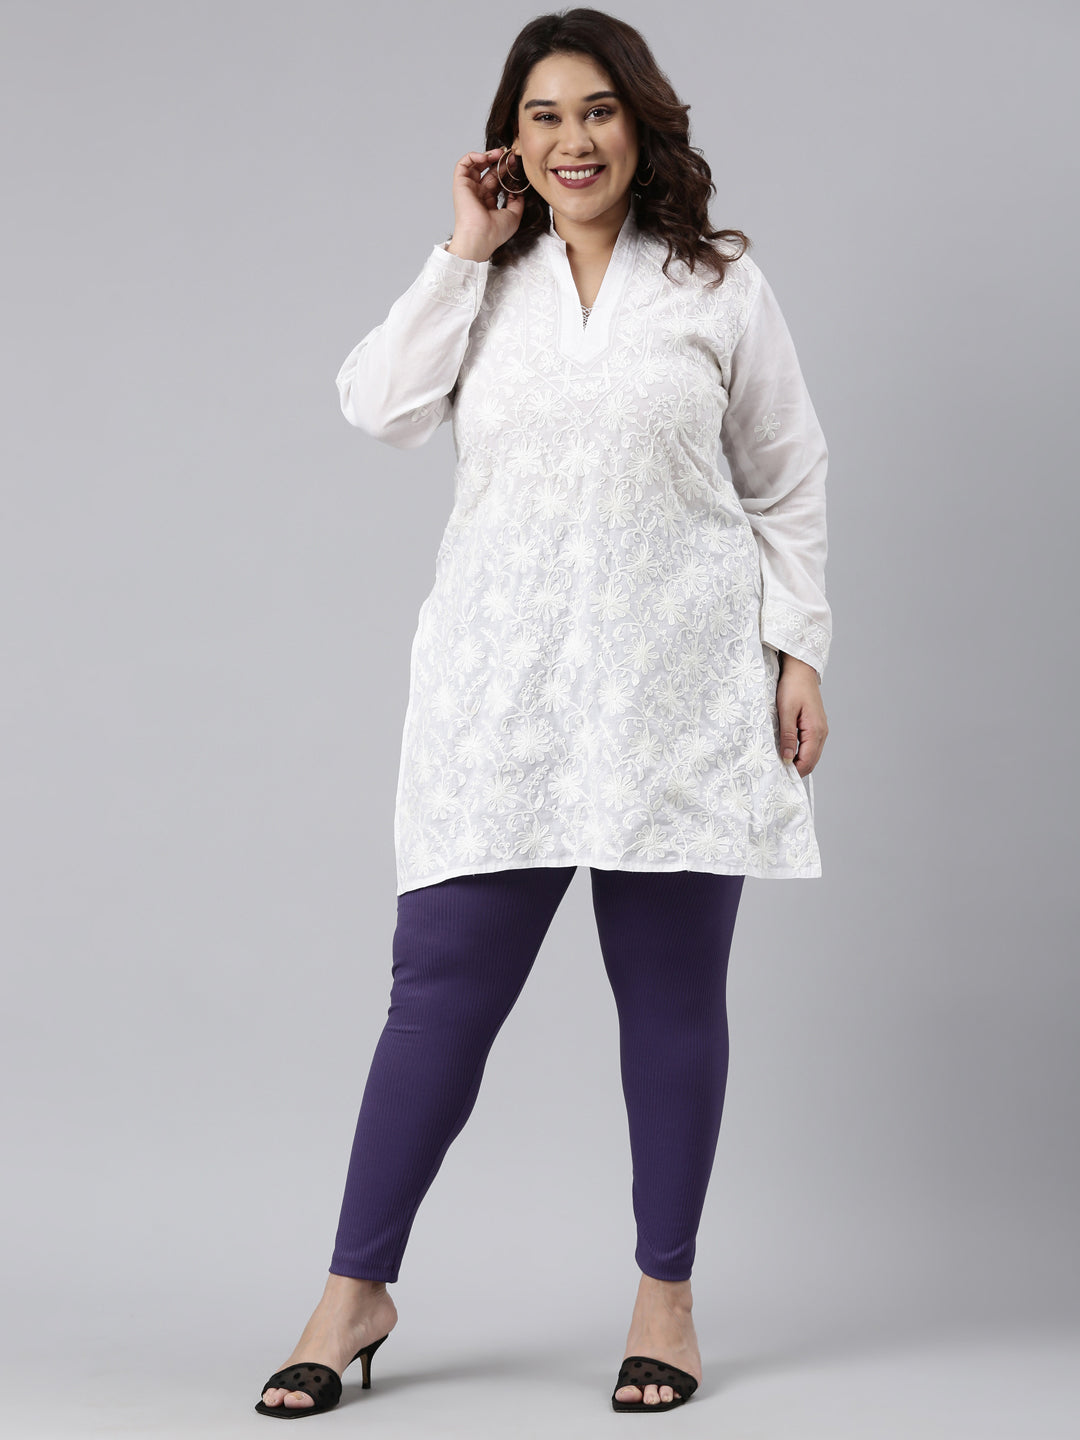 LARACE Short Sleeve T-Shirts for Women Plus size Tops V-Neck Tunic Tops for Leggings  White 4X - Walmart.com